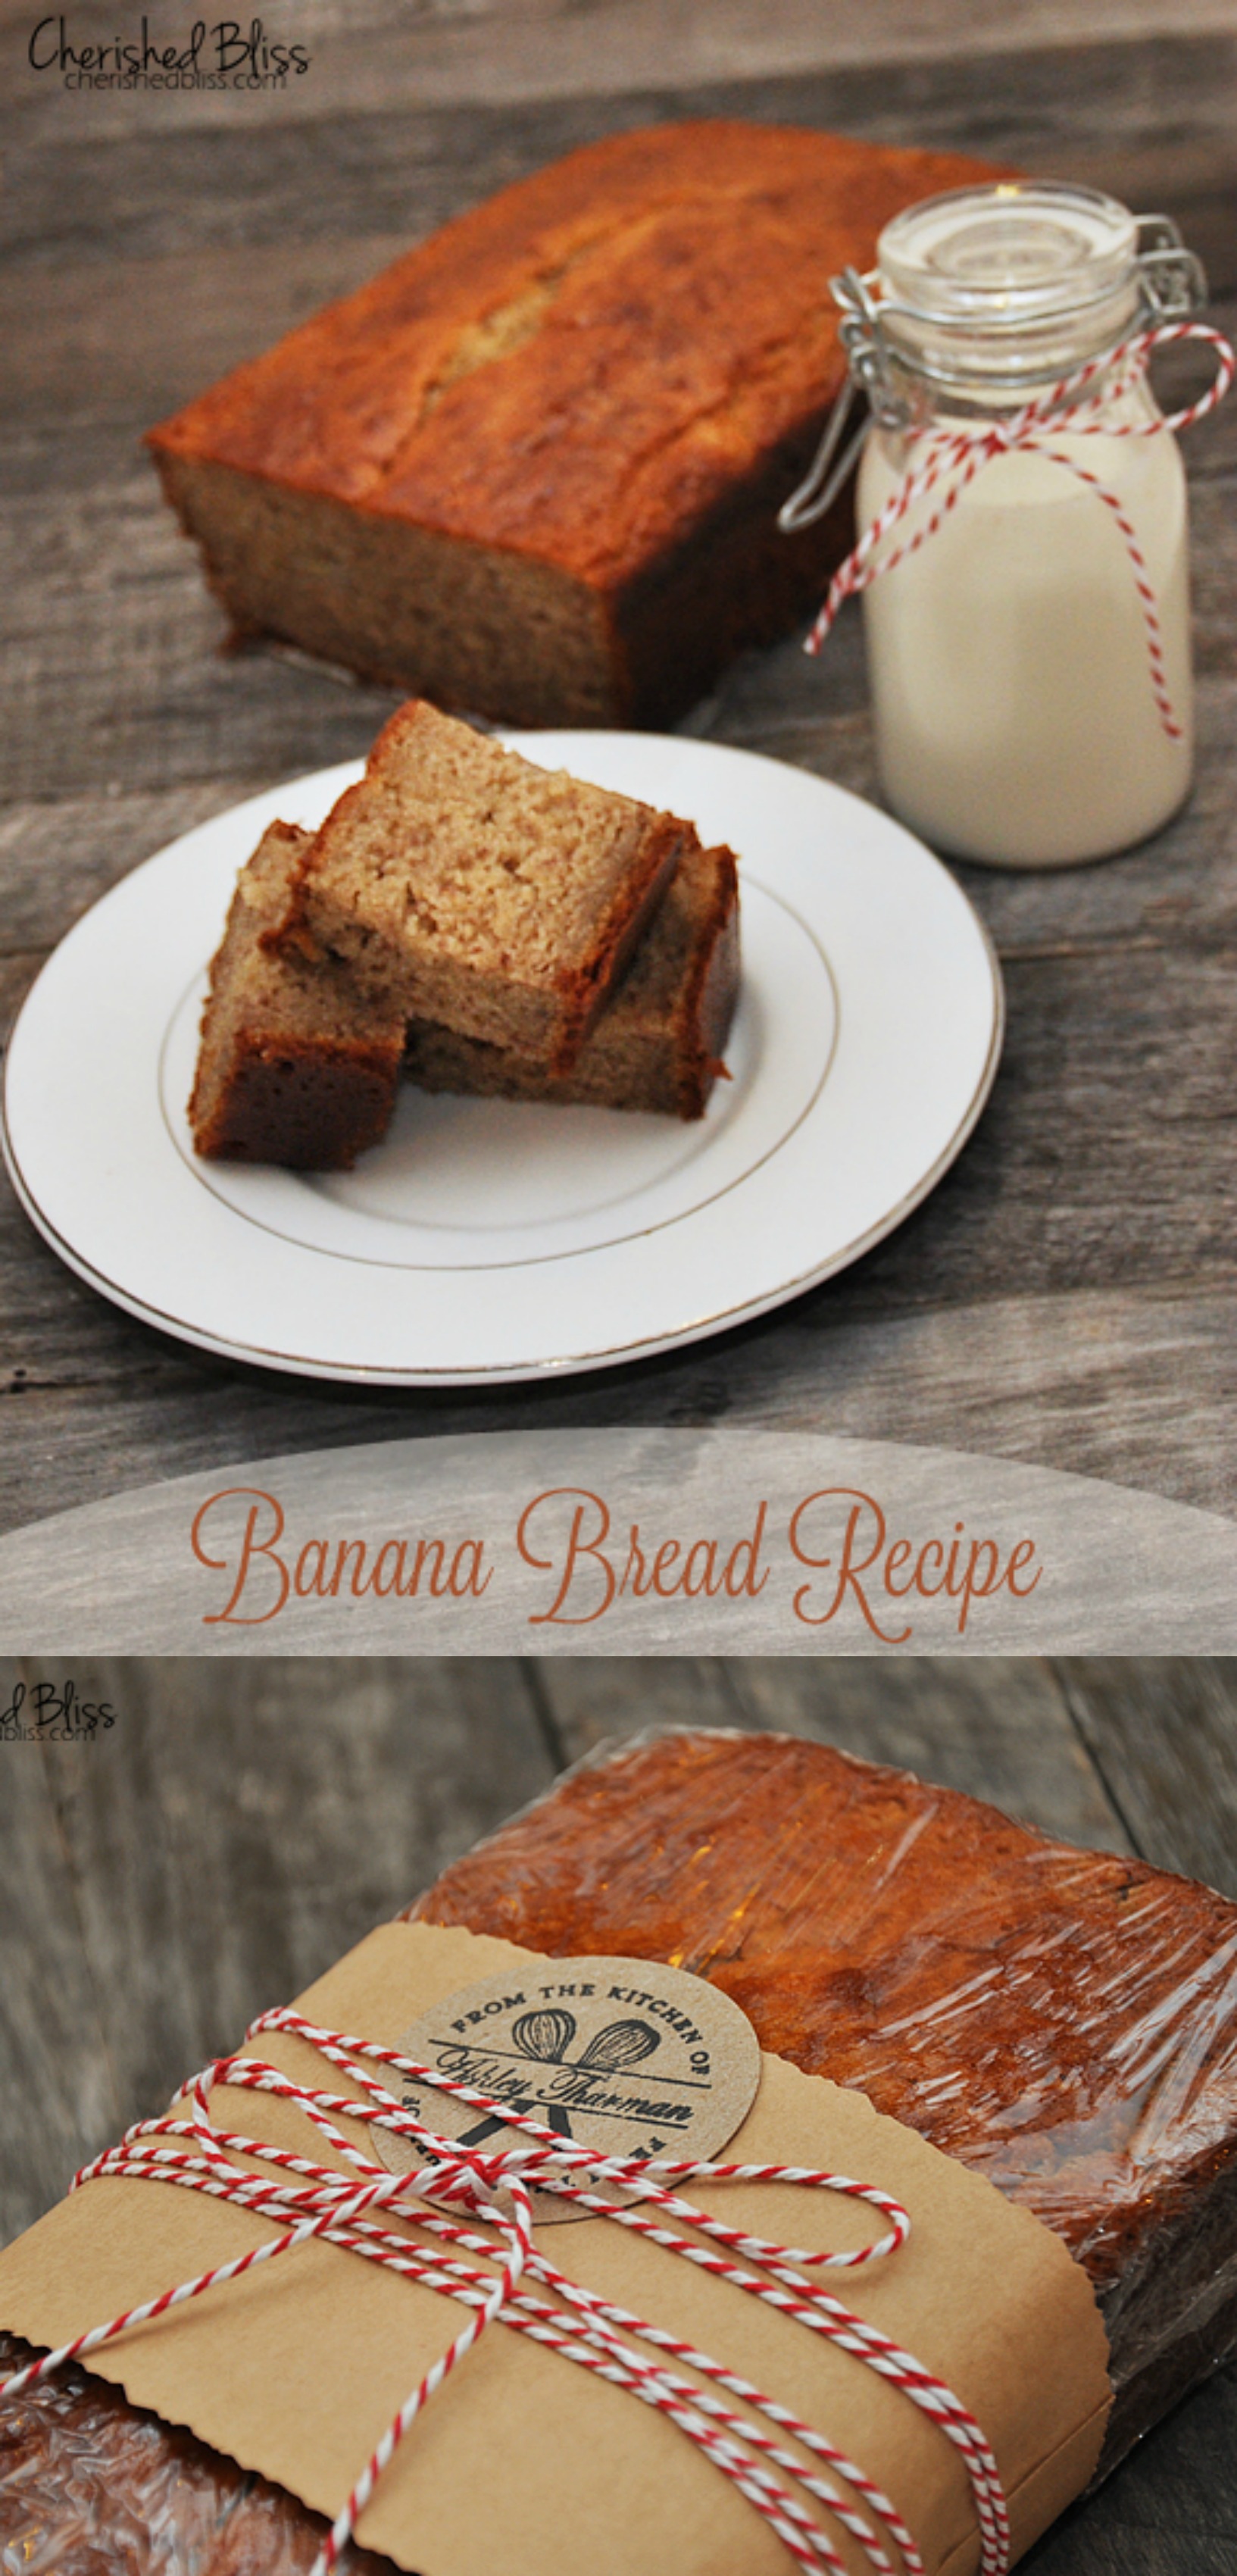 Banana Bread Recipe and Gift Idea by Cherished Bliss